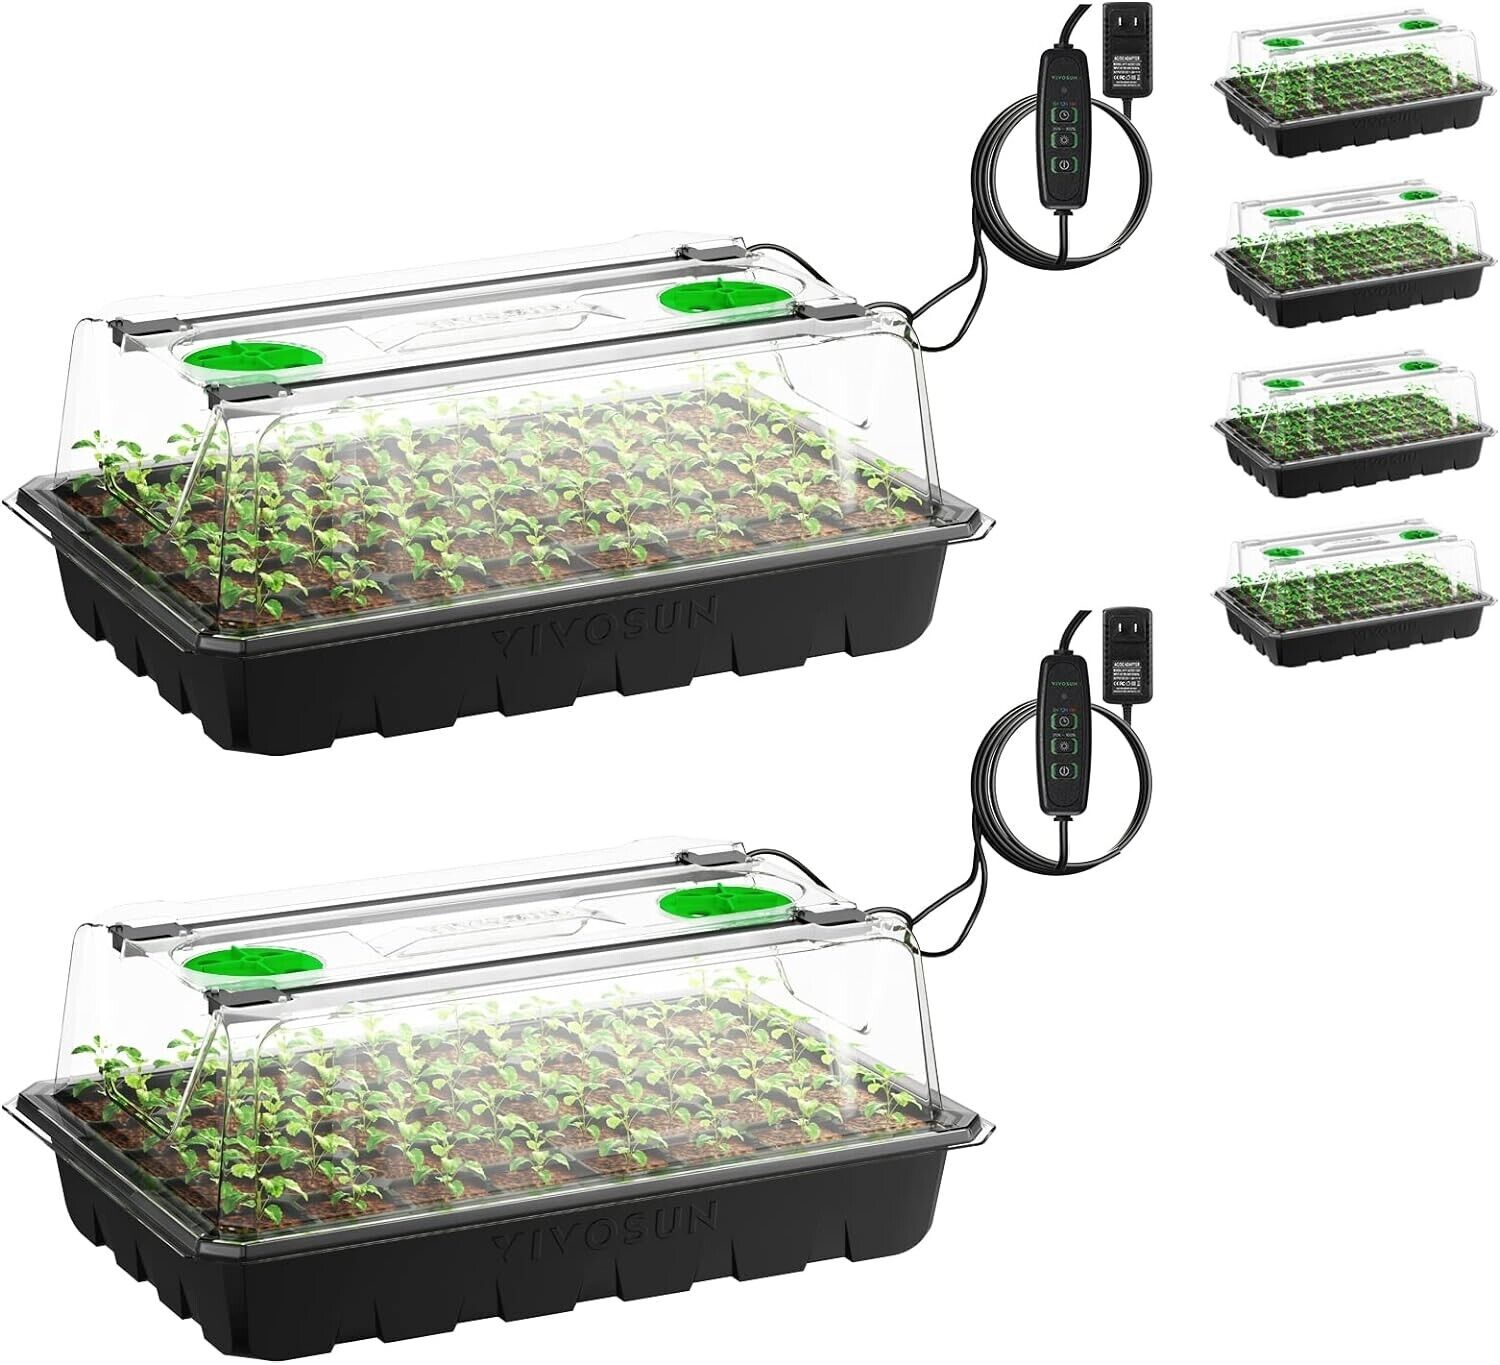 VIVOSUN 6-Pack Seed Starter Trays, 240-Cell Seed Starter Kit w/2 pcs LED Lights